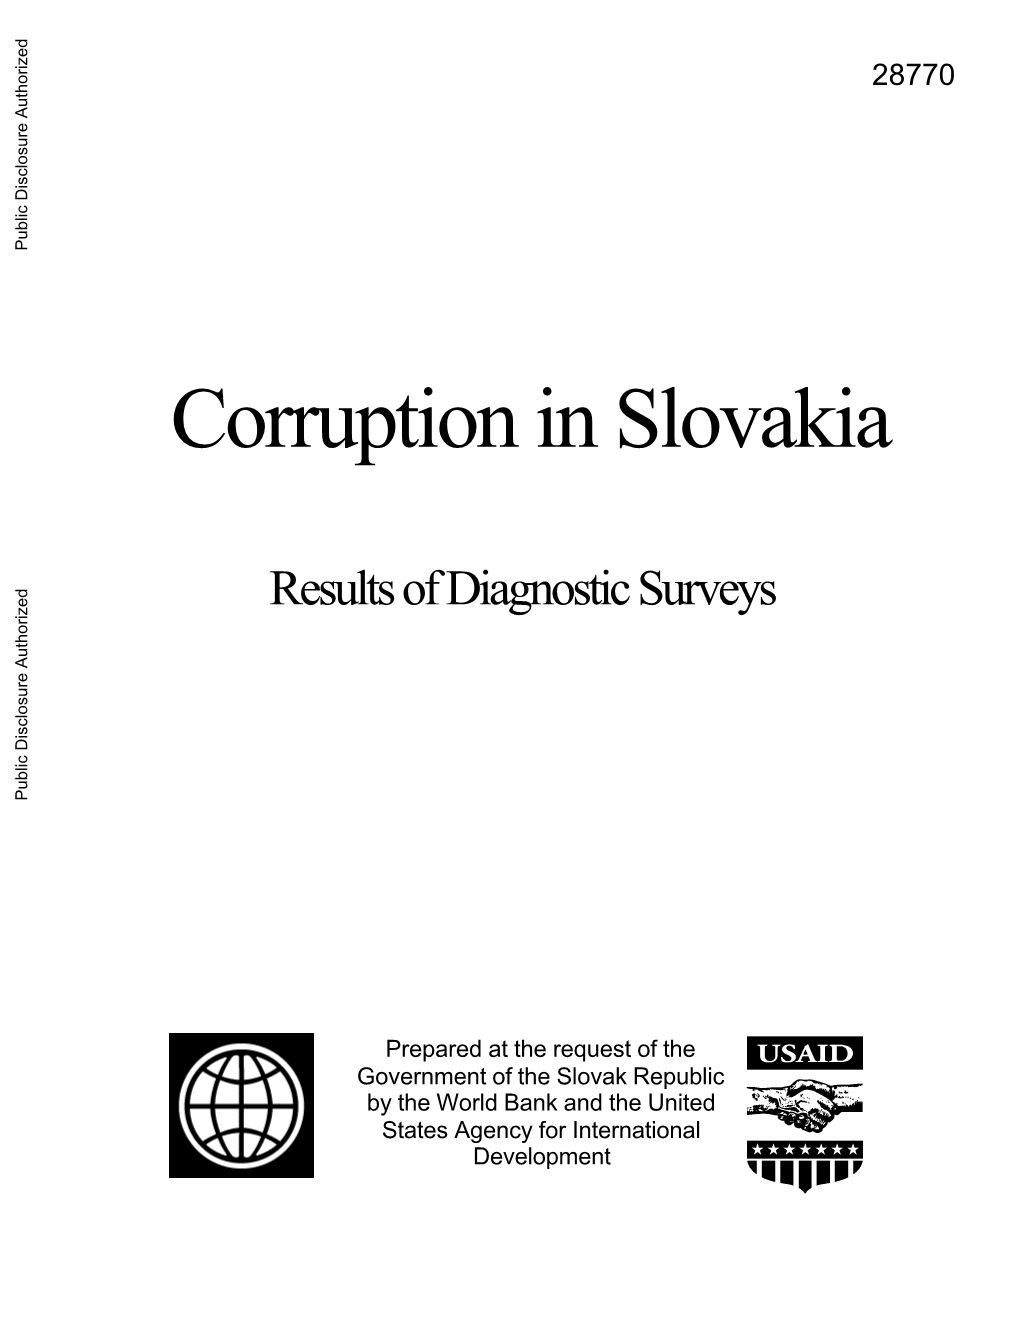 Corruption in Slovakia Public Disclosure Authorized Results of Diagnostic Surveys Public Disclosure Authorized